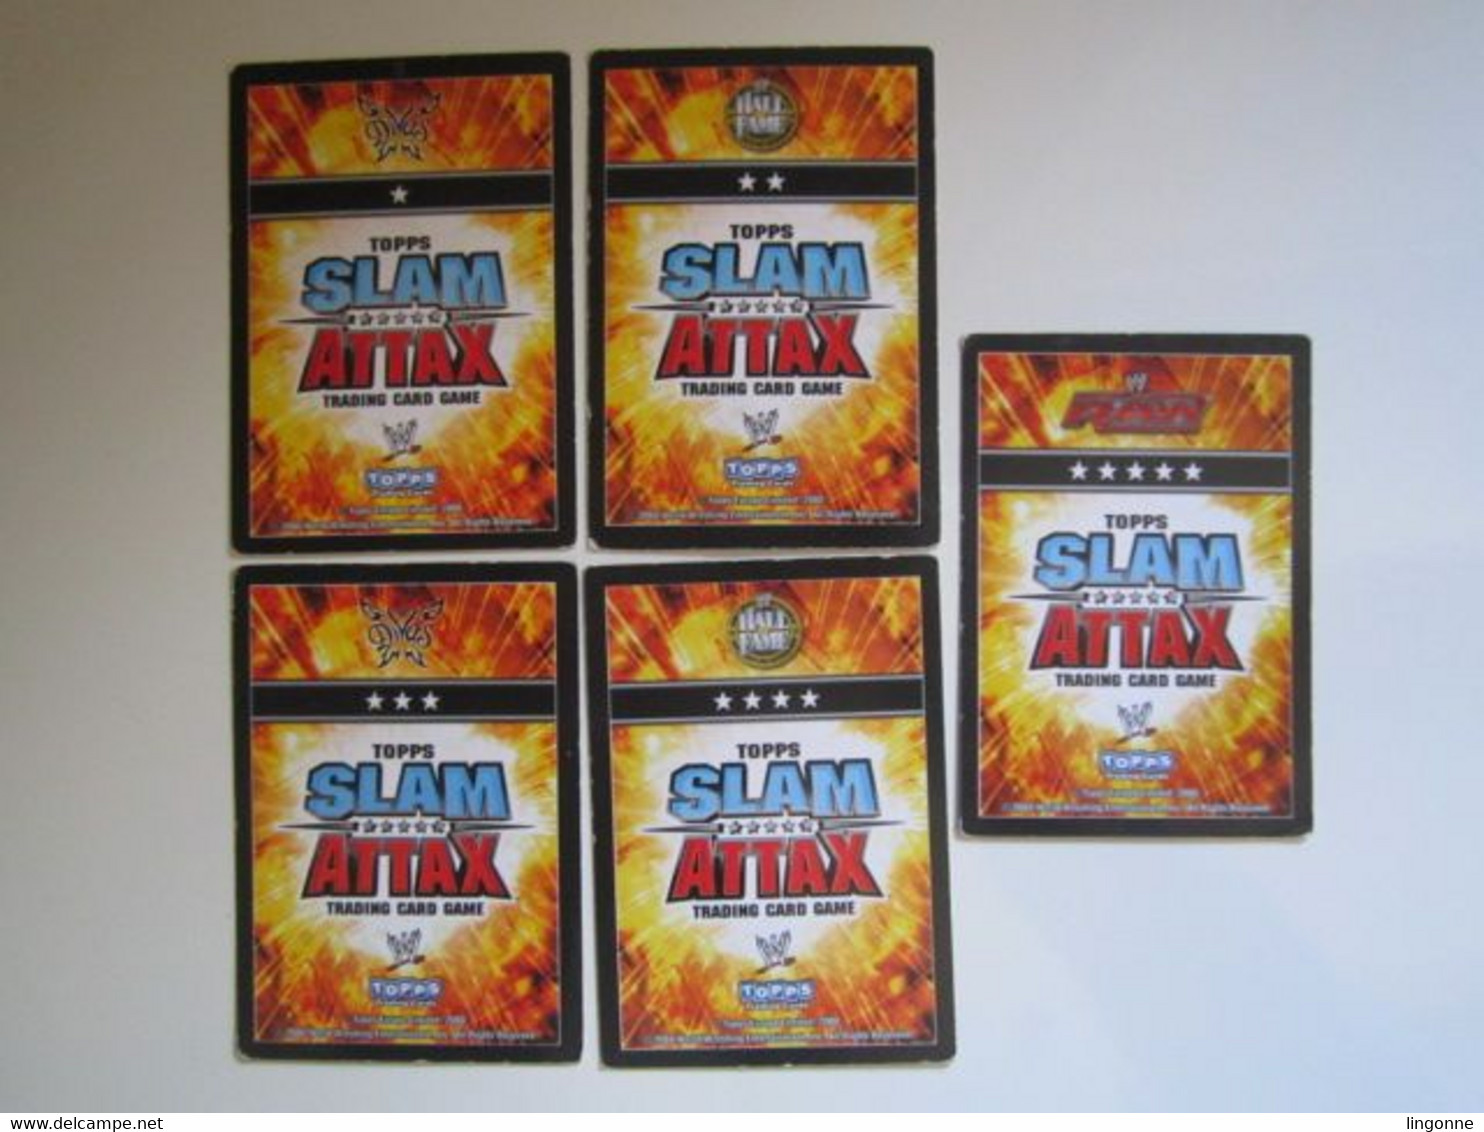 5 Cartes De Catch TOPPS SLAM ATTAX Trading Card Game - Tarjetas